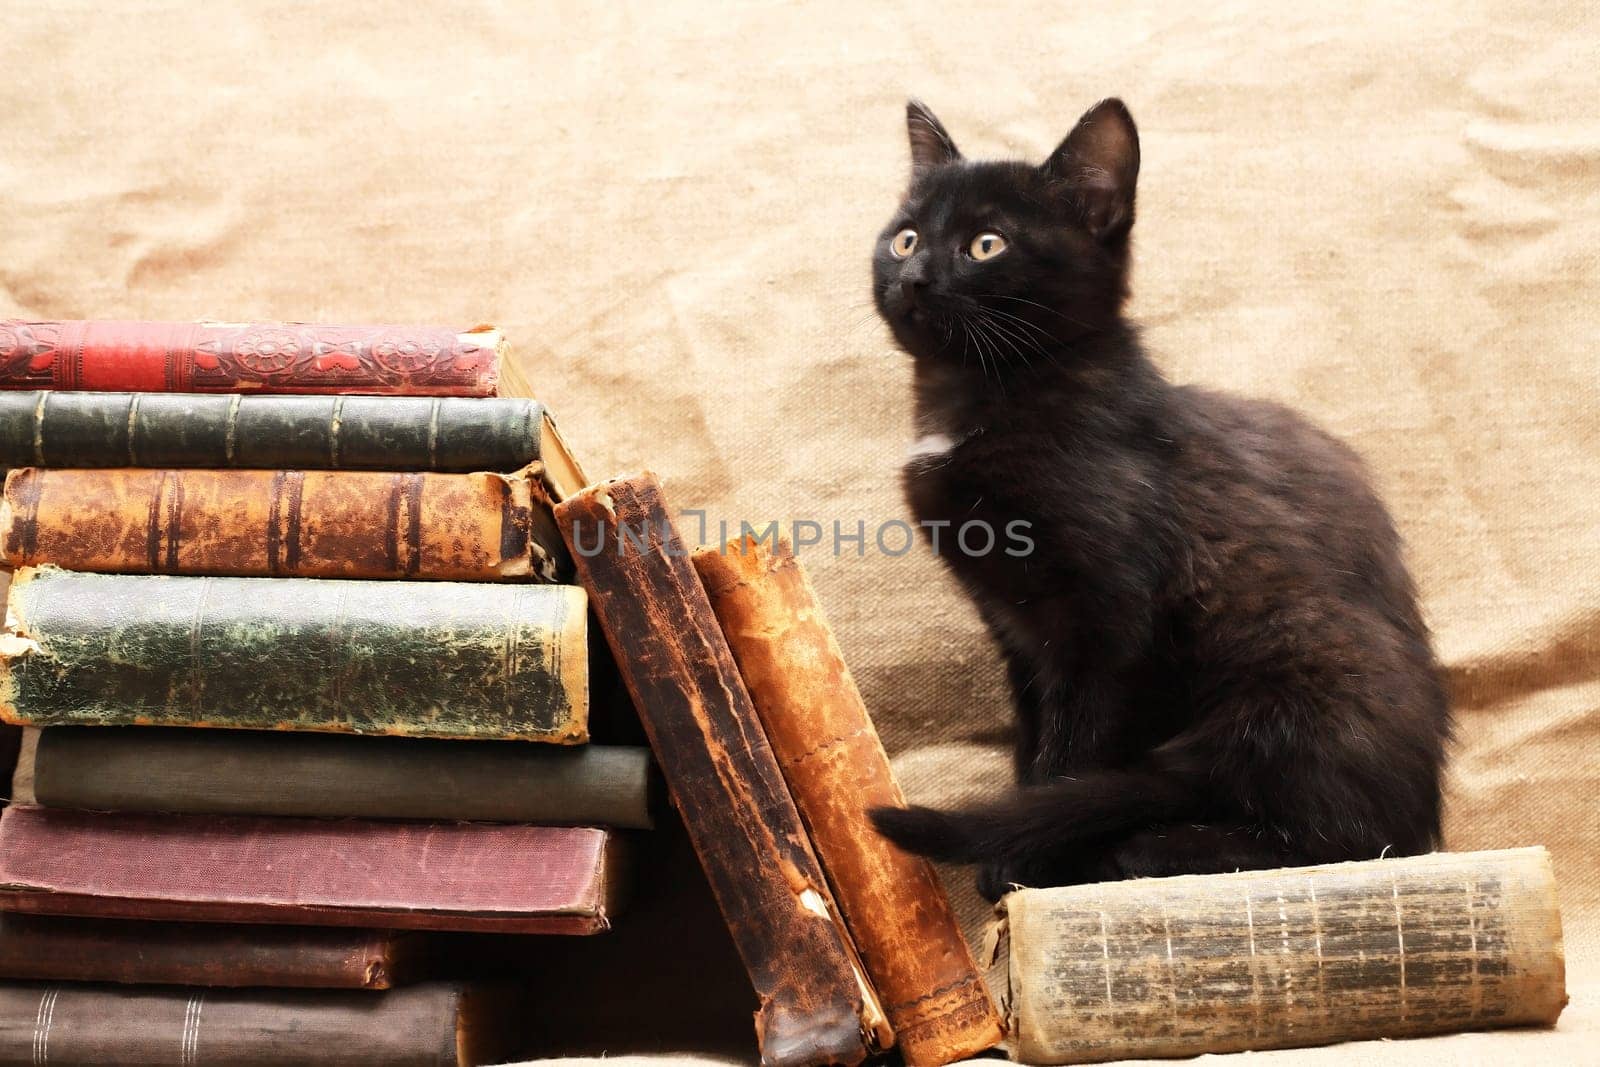 Kitten And Books by kvkirillov